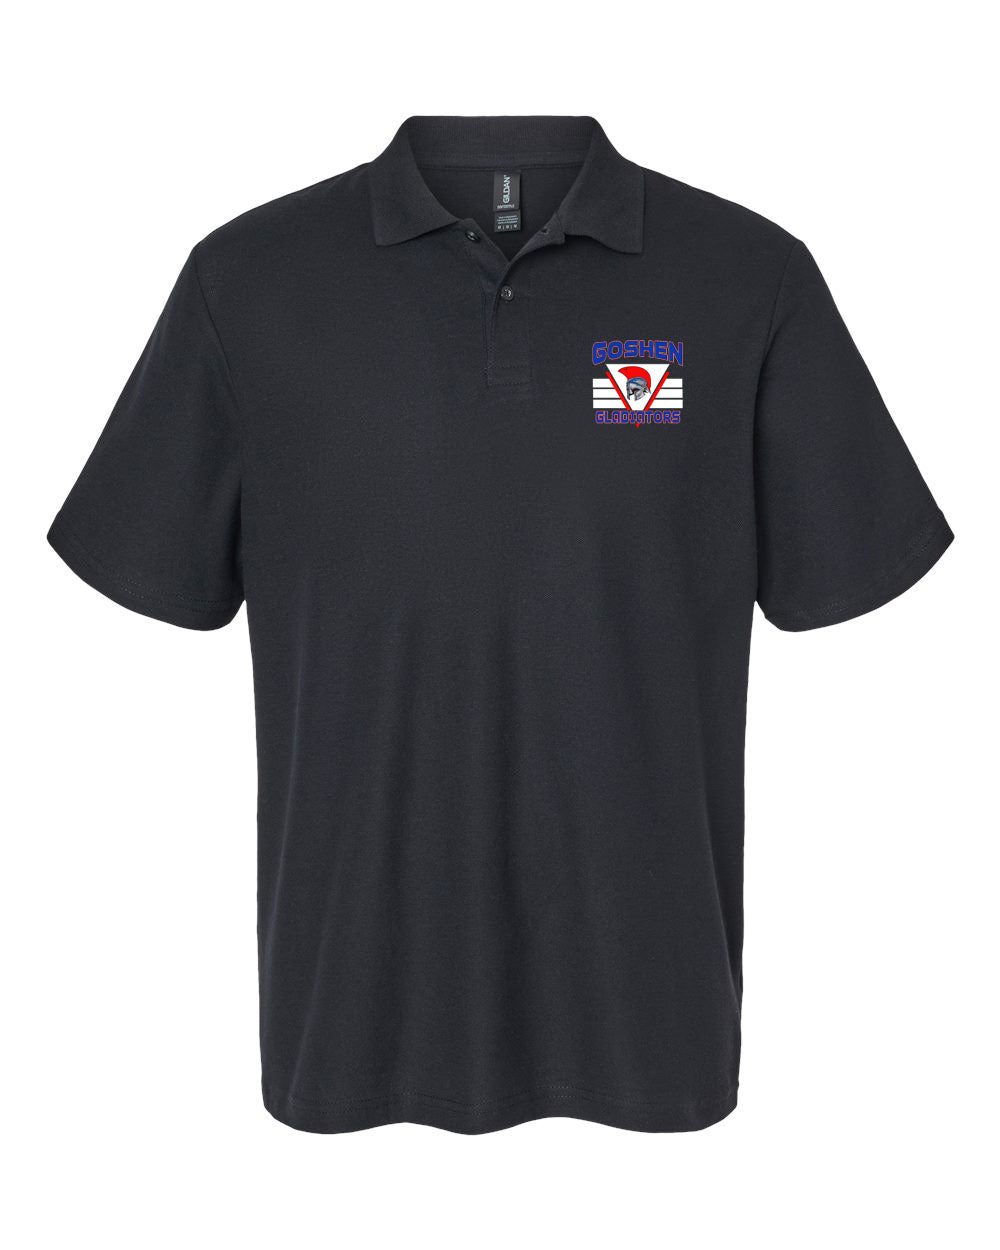 Goshen School Design 2 Polo T-Shirt